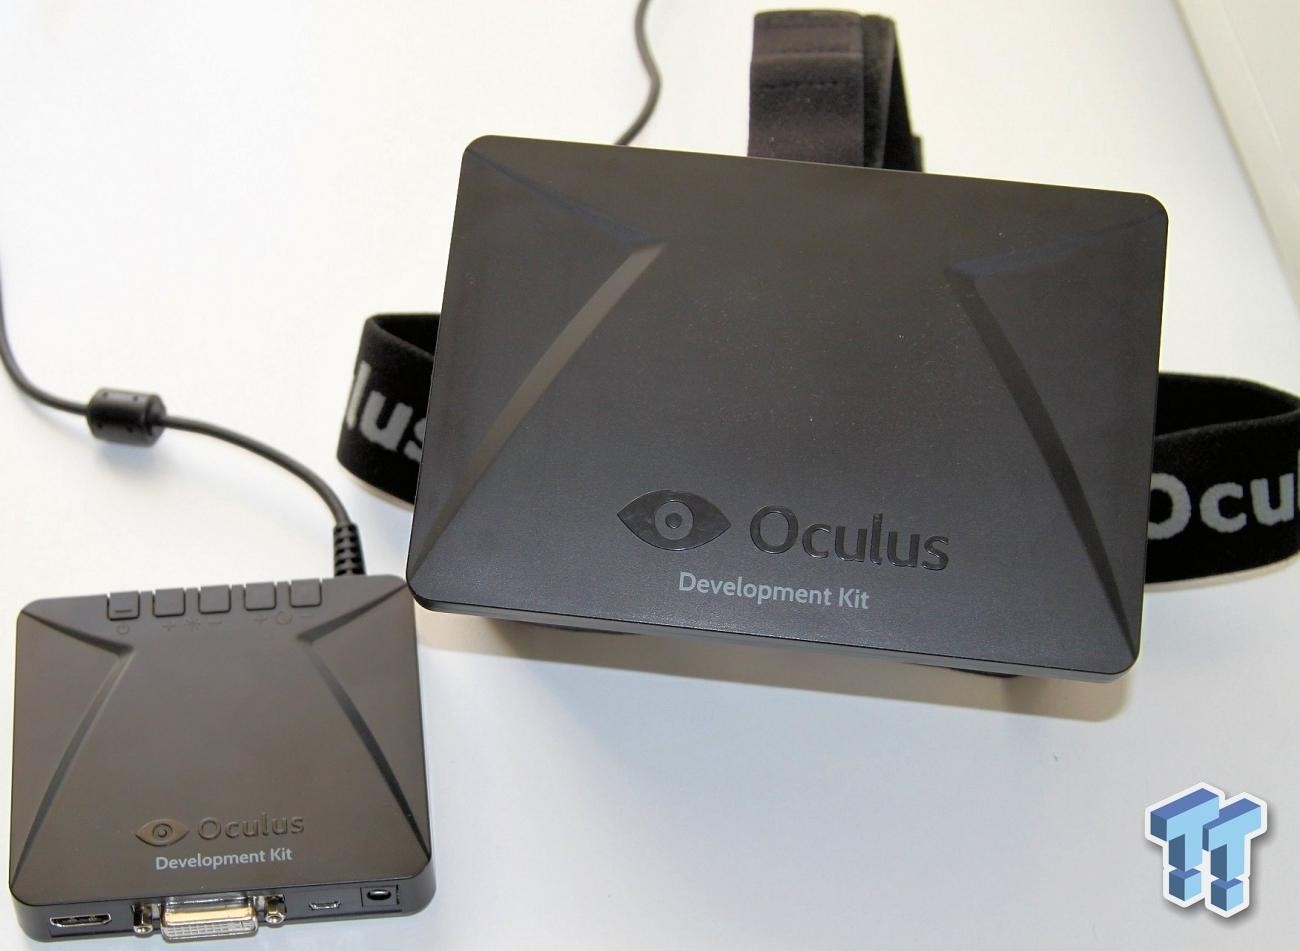 Oculus Rift no longer being produced, DK2 its way?